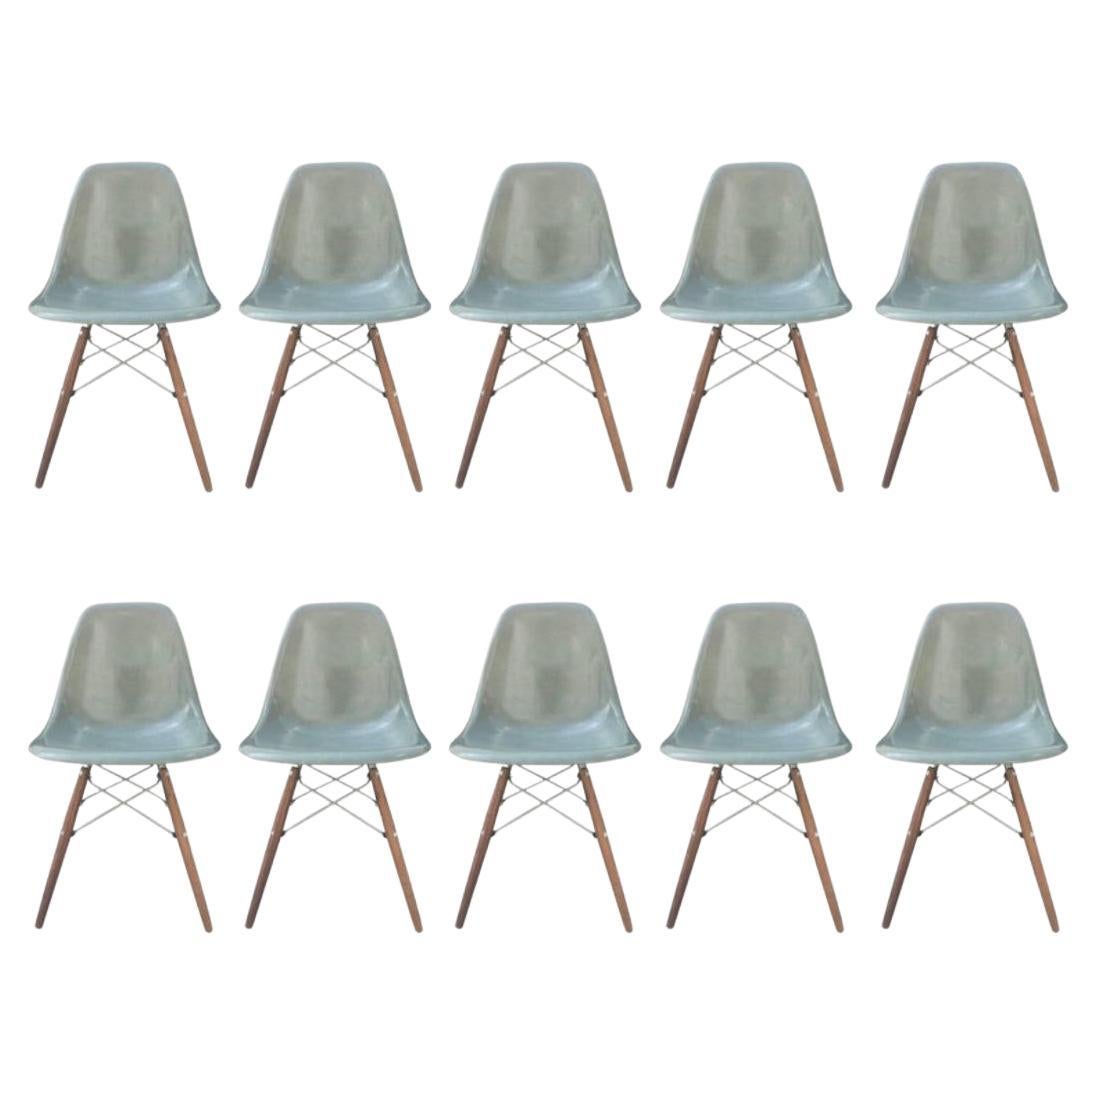 Ten Herman Miller Eames Seafoam Green Dining Chairs